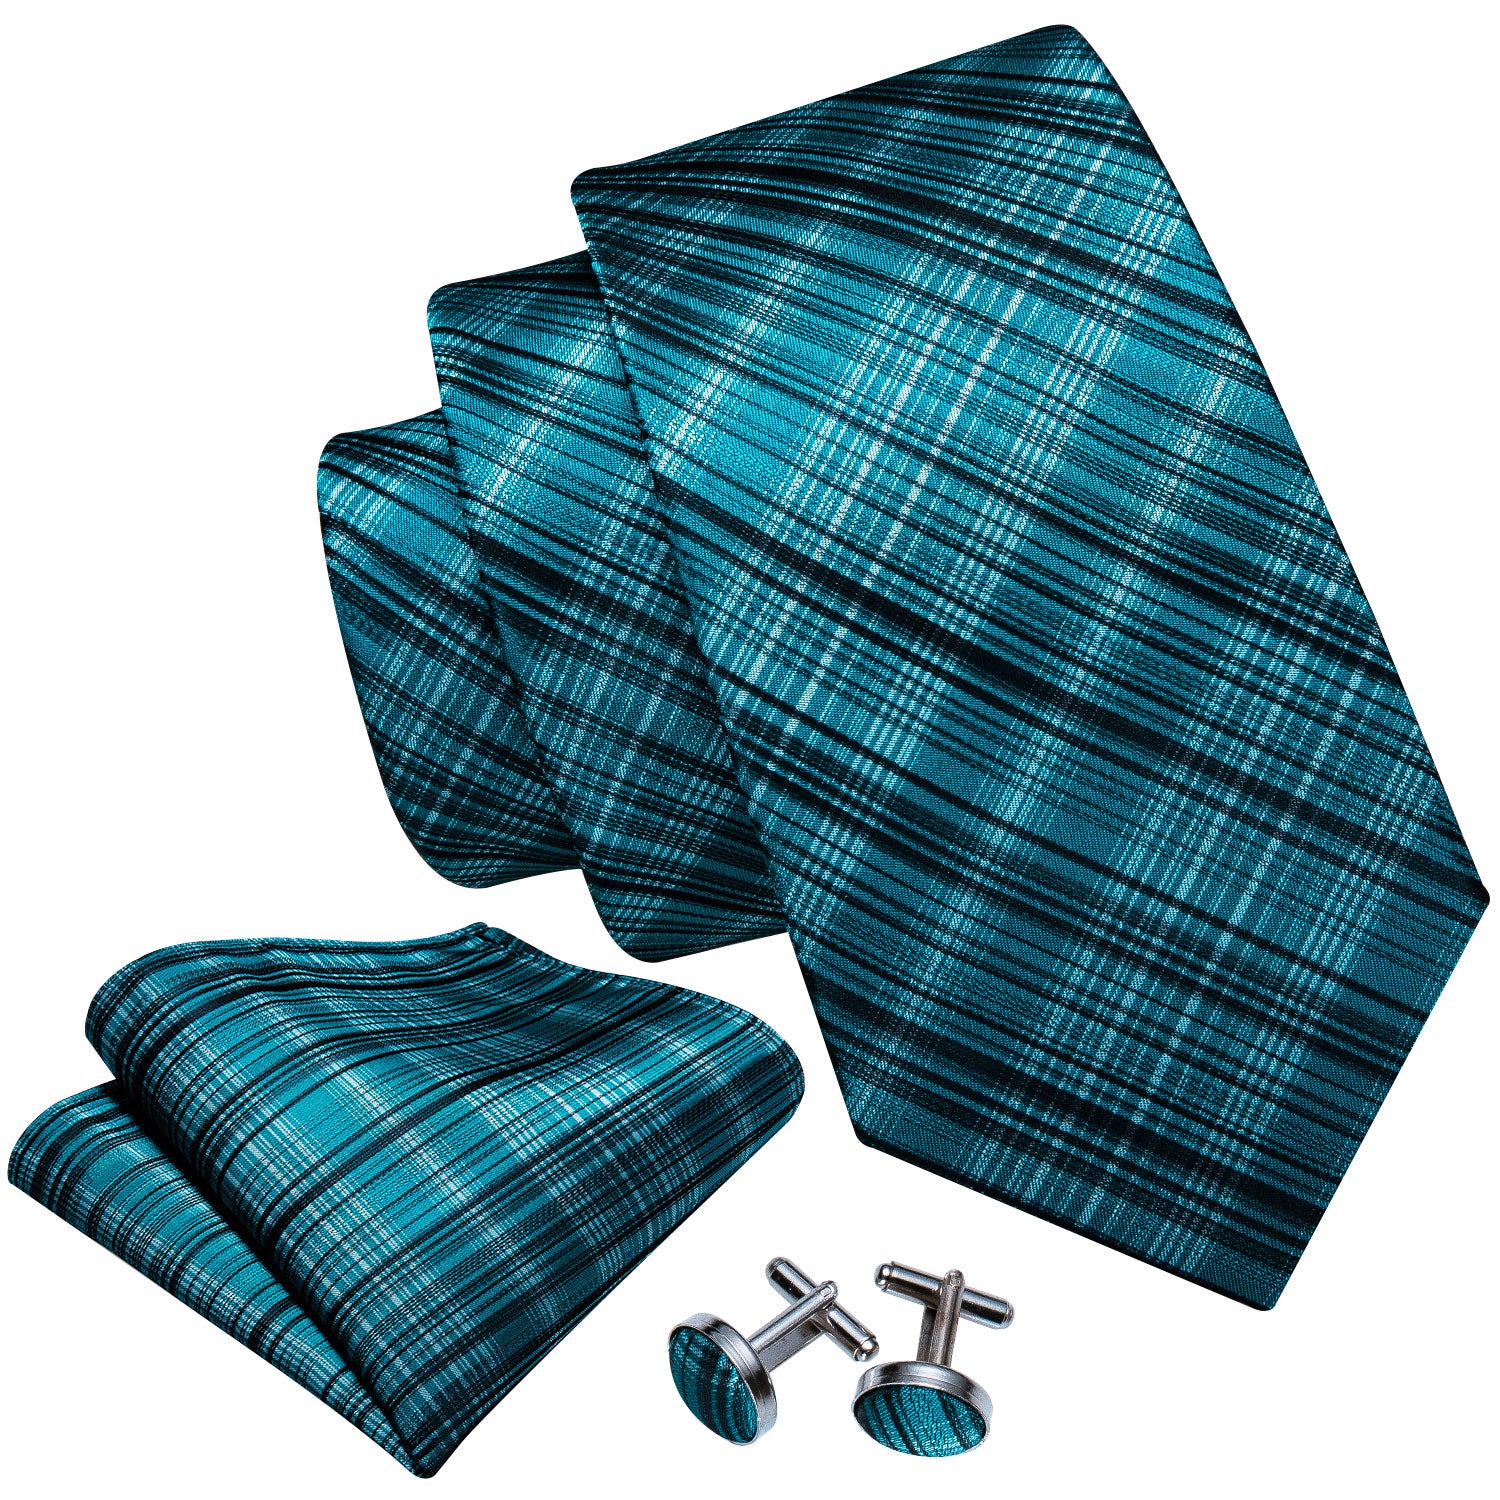 High Gloss Blue and Black Stripe Tie Pocket Square Cufflinks Set